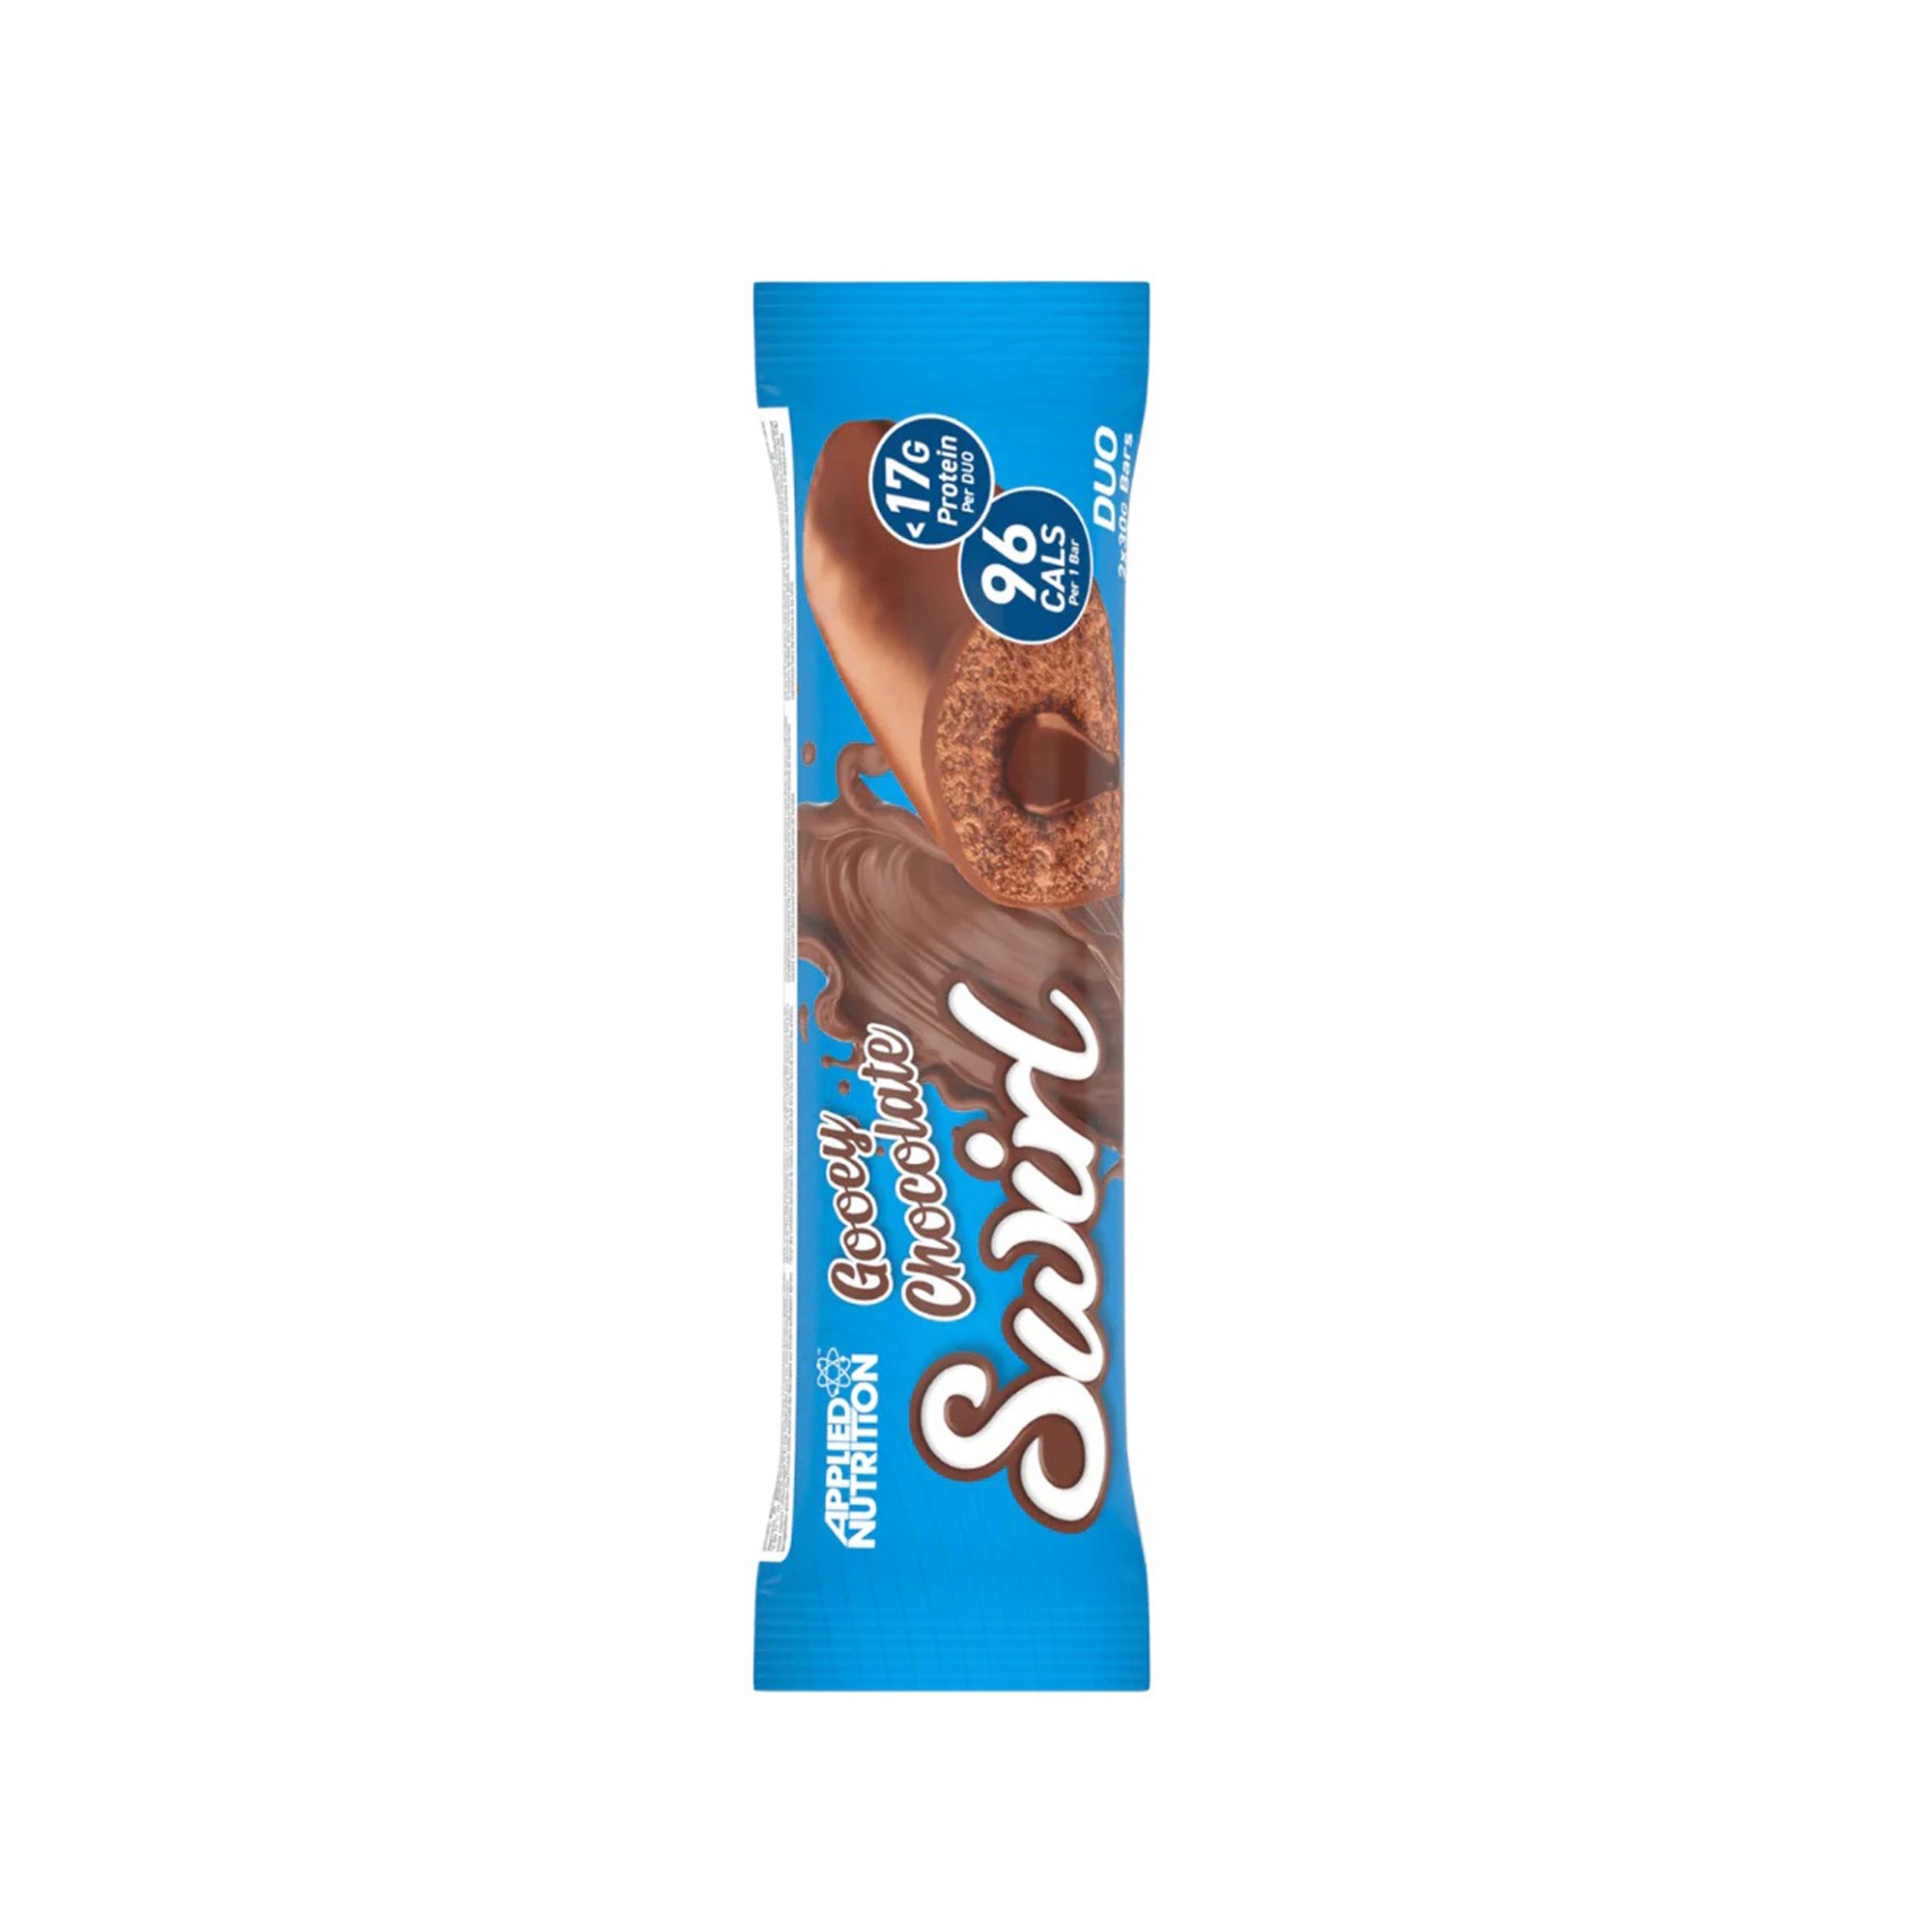 Applied Nutrition Swirl Duo Bar, Gooey Chocolate, 1 Bar 60G 16G PROTEIN